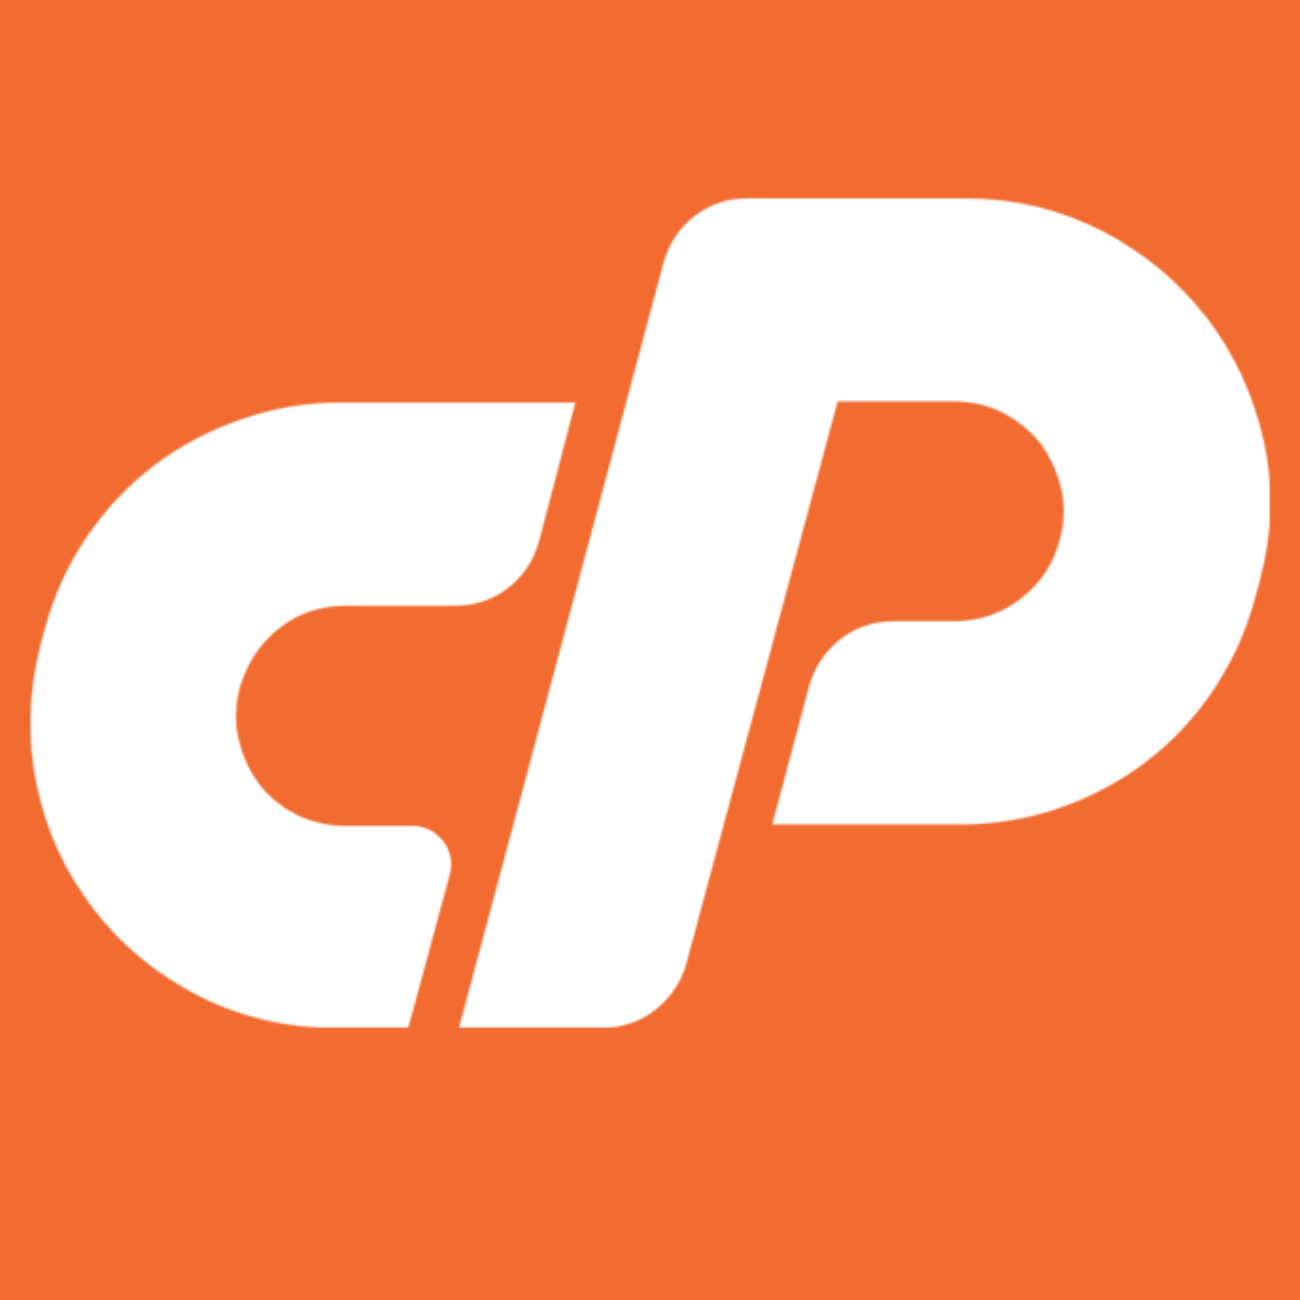 cpanel hosting icon - logo